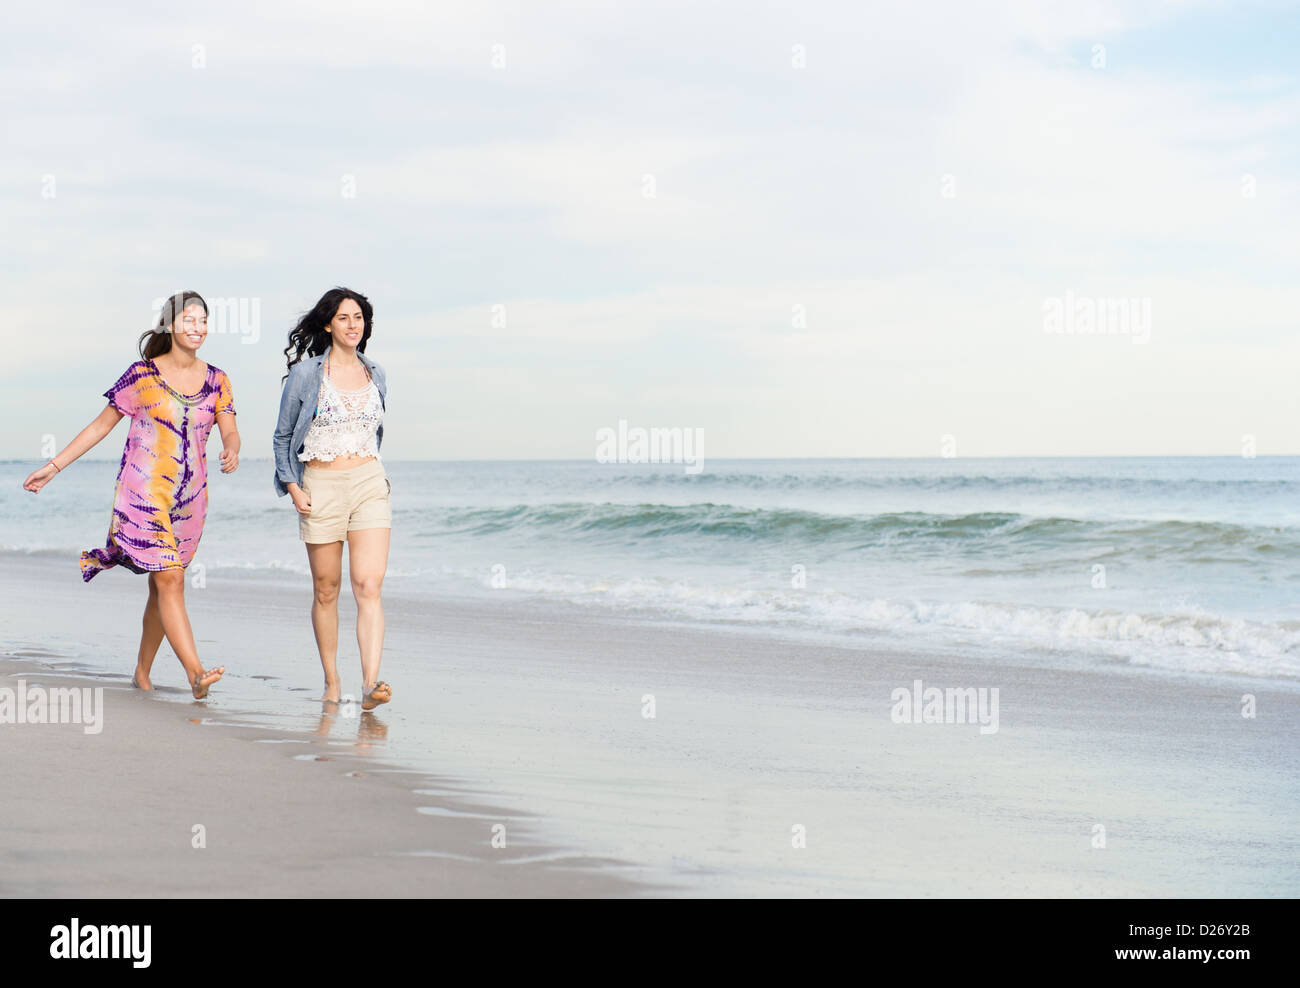 USA, New York State, Rockaway Beach, Two women walking on beach Stock Photo